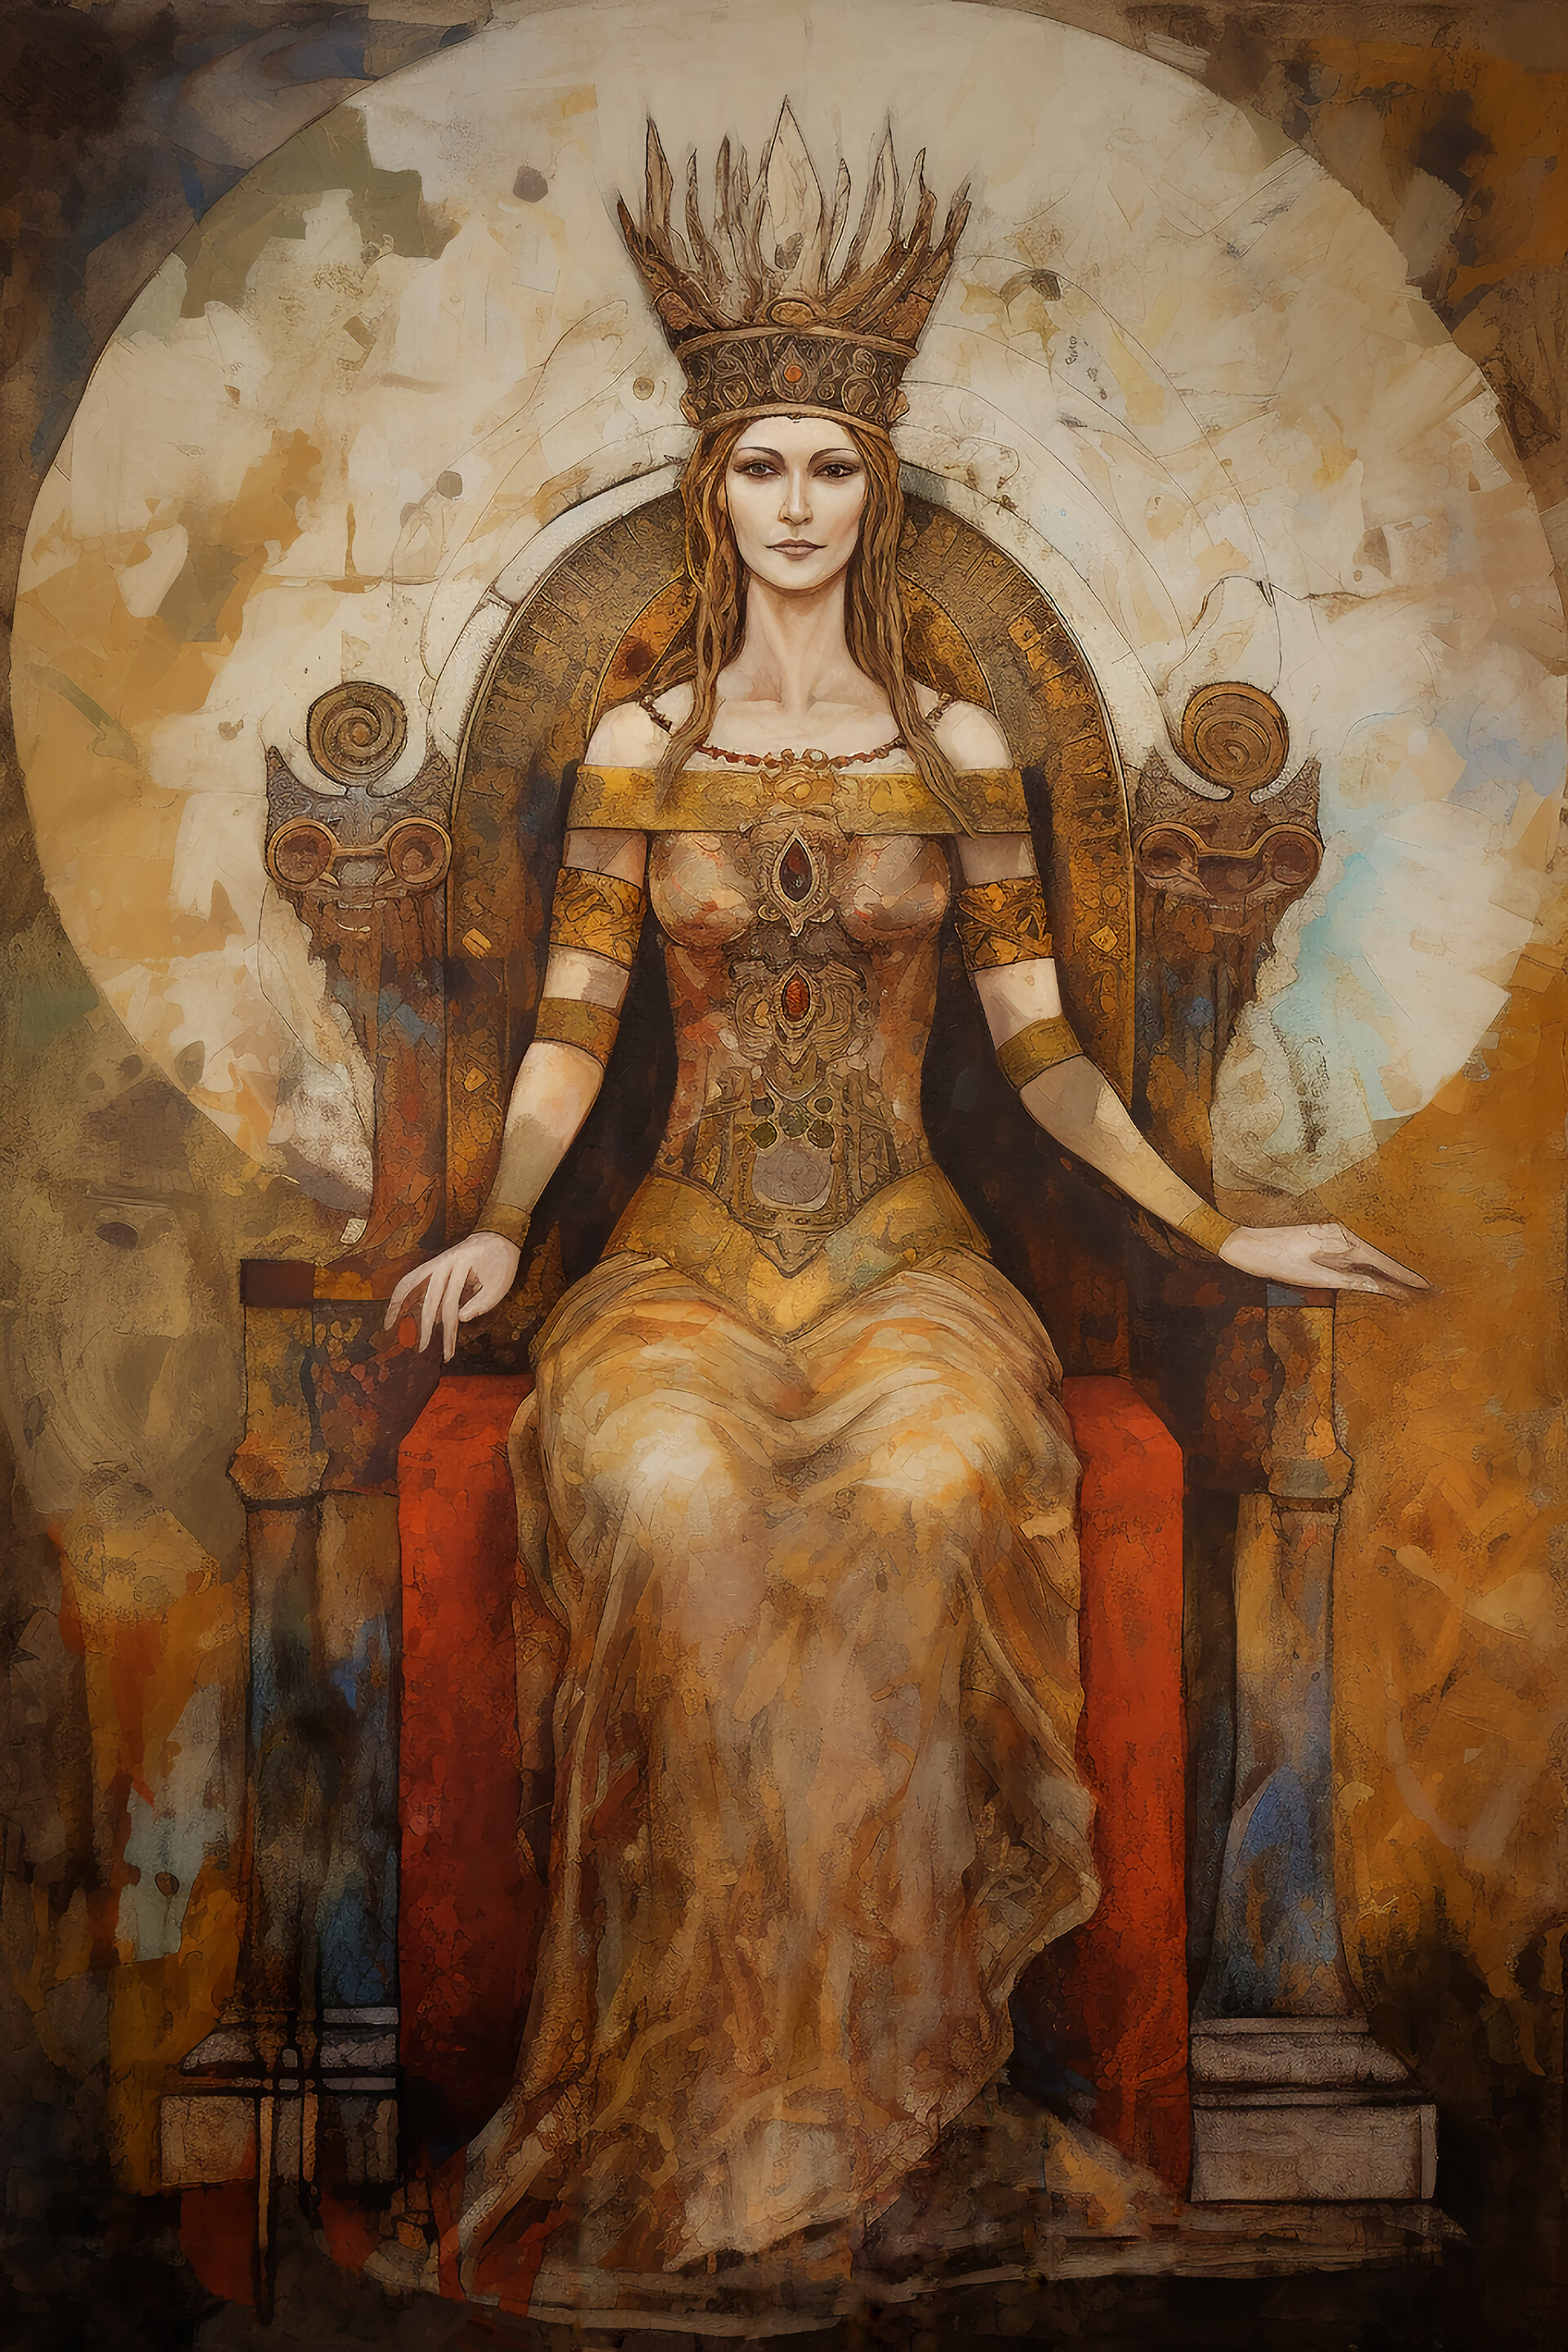 Frigg - Asgard's Wise Queen